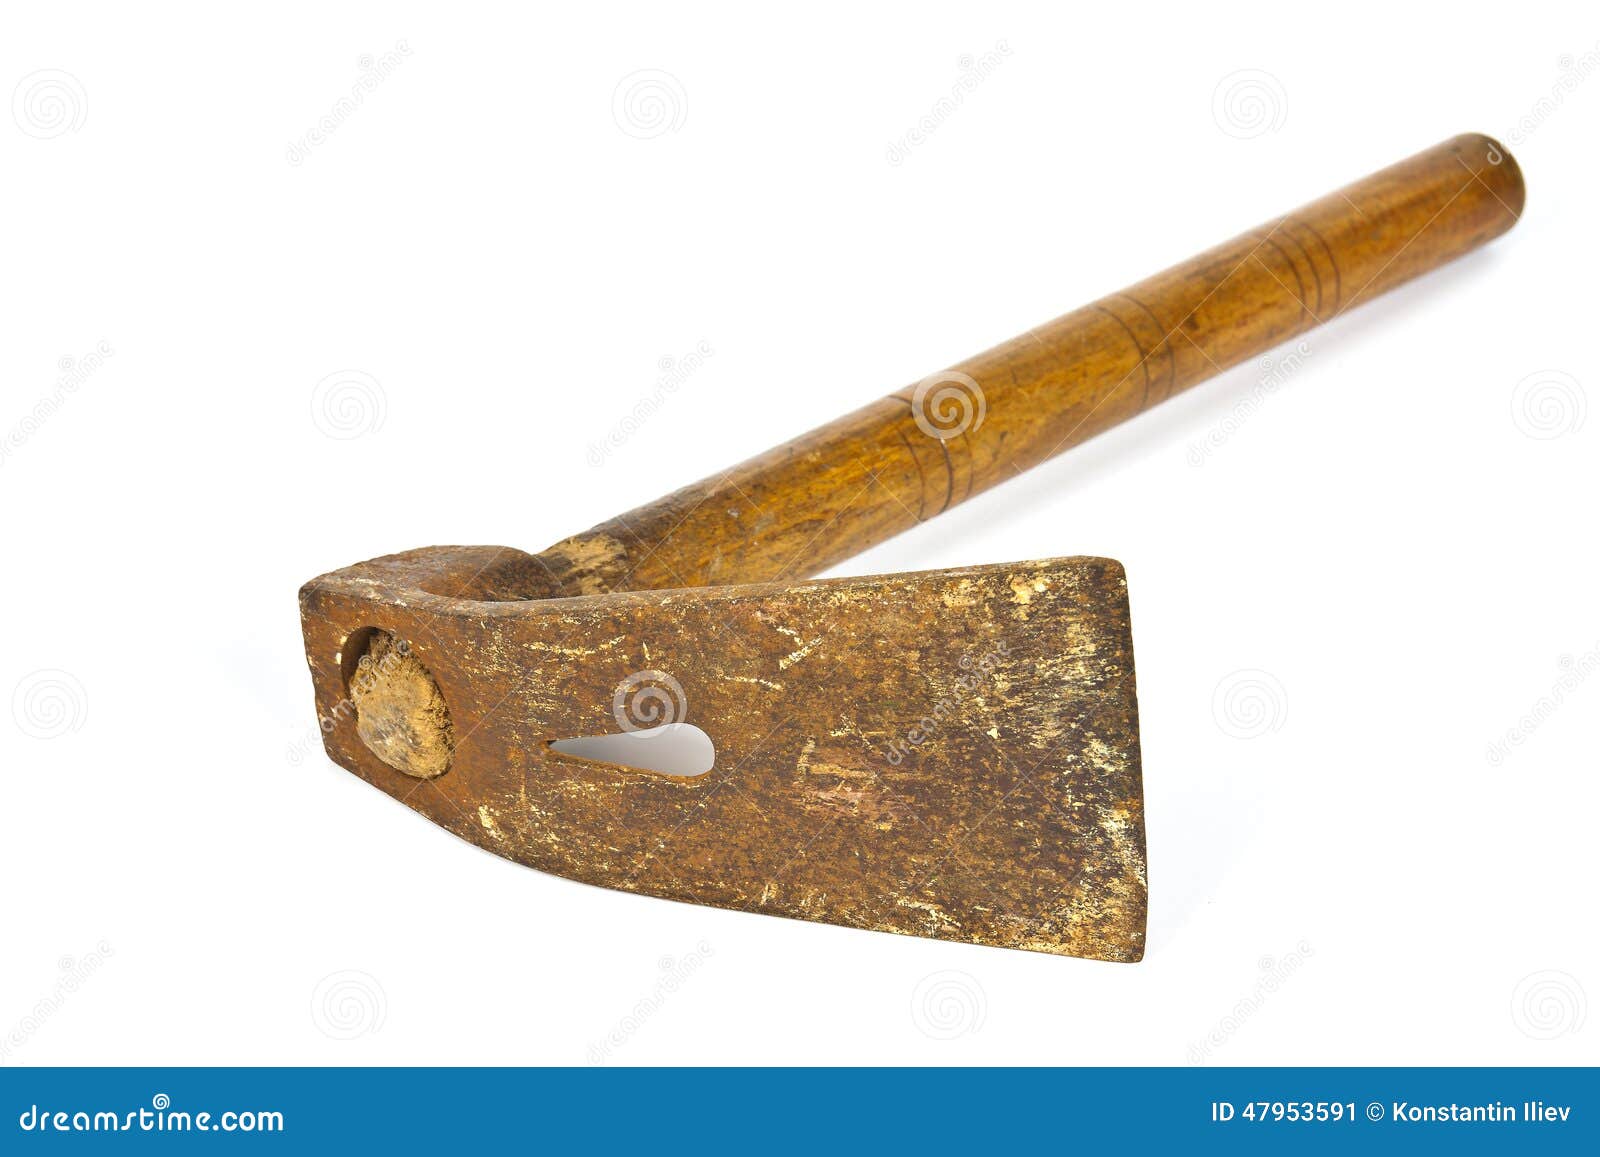 Carpentry tool adz stock image. Image of hand, equipment - 47953591